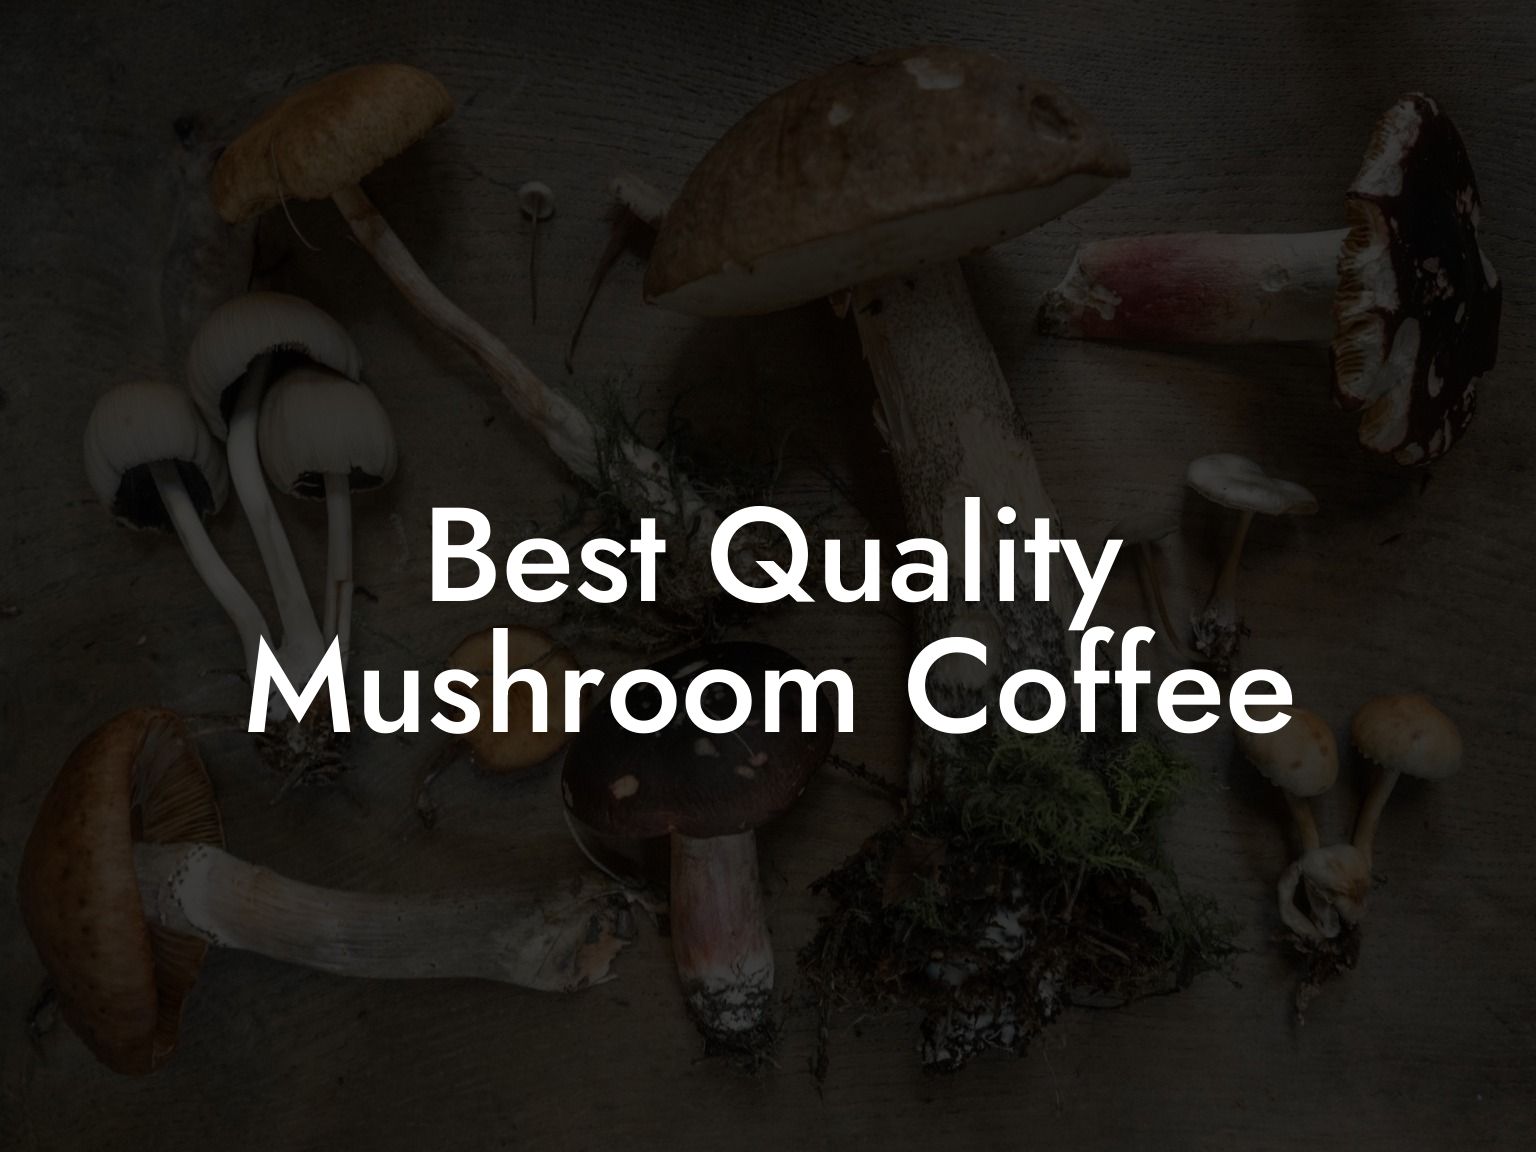 Best Quality Mushroom Coffee